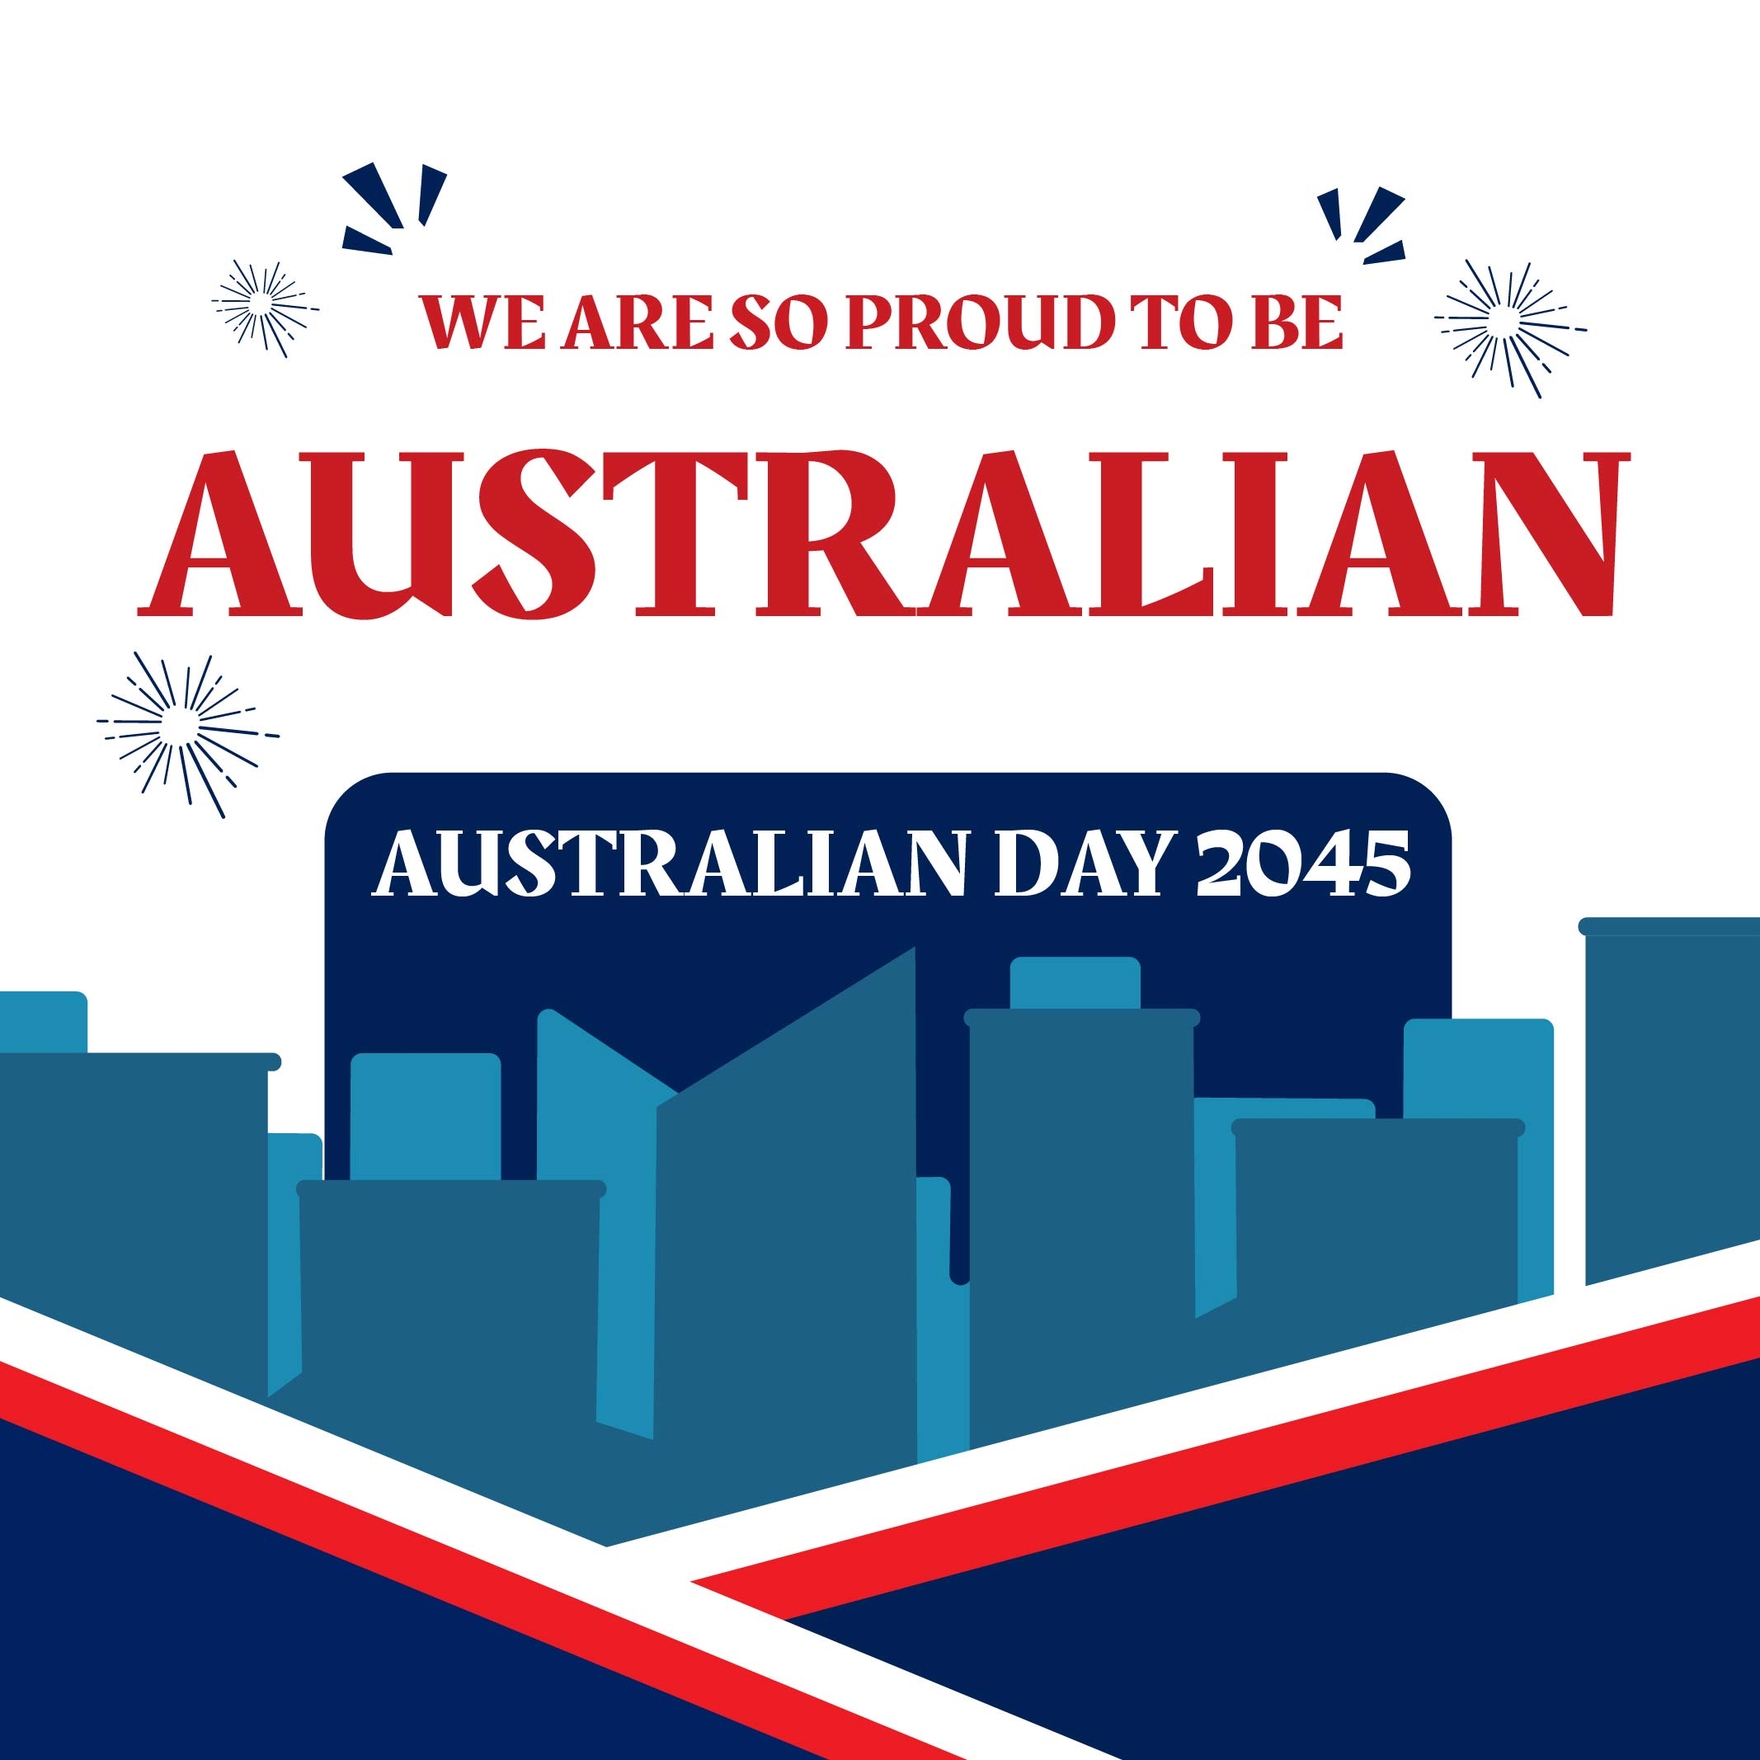 Free Australia Day Greeting Card Vector in Illustrator, PSD, EPS, SVG, JPG, PNG